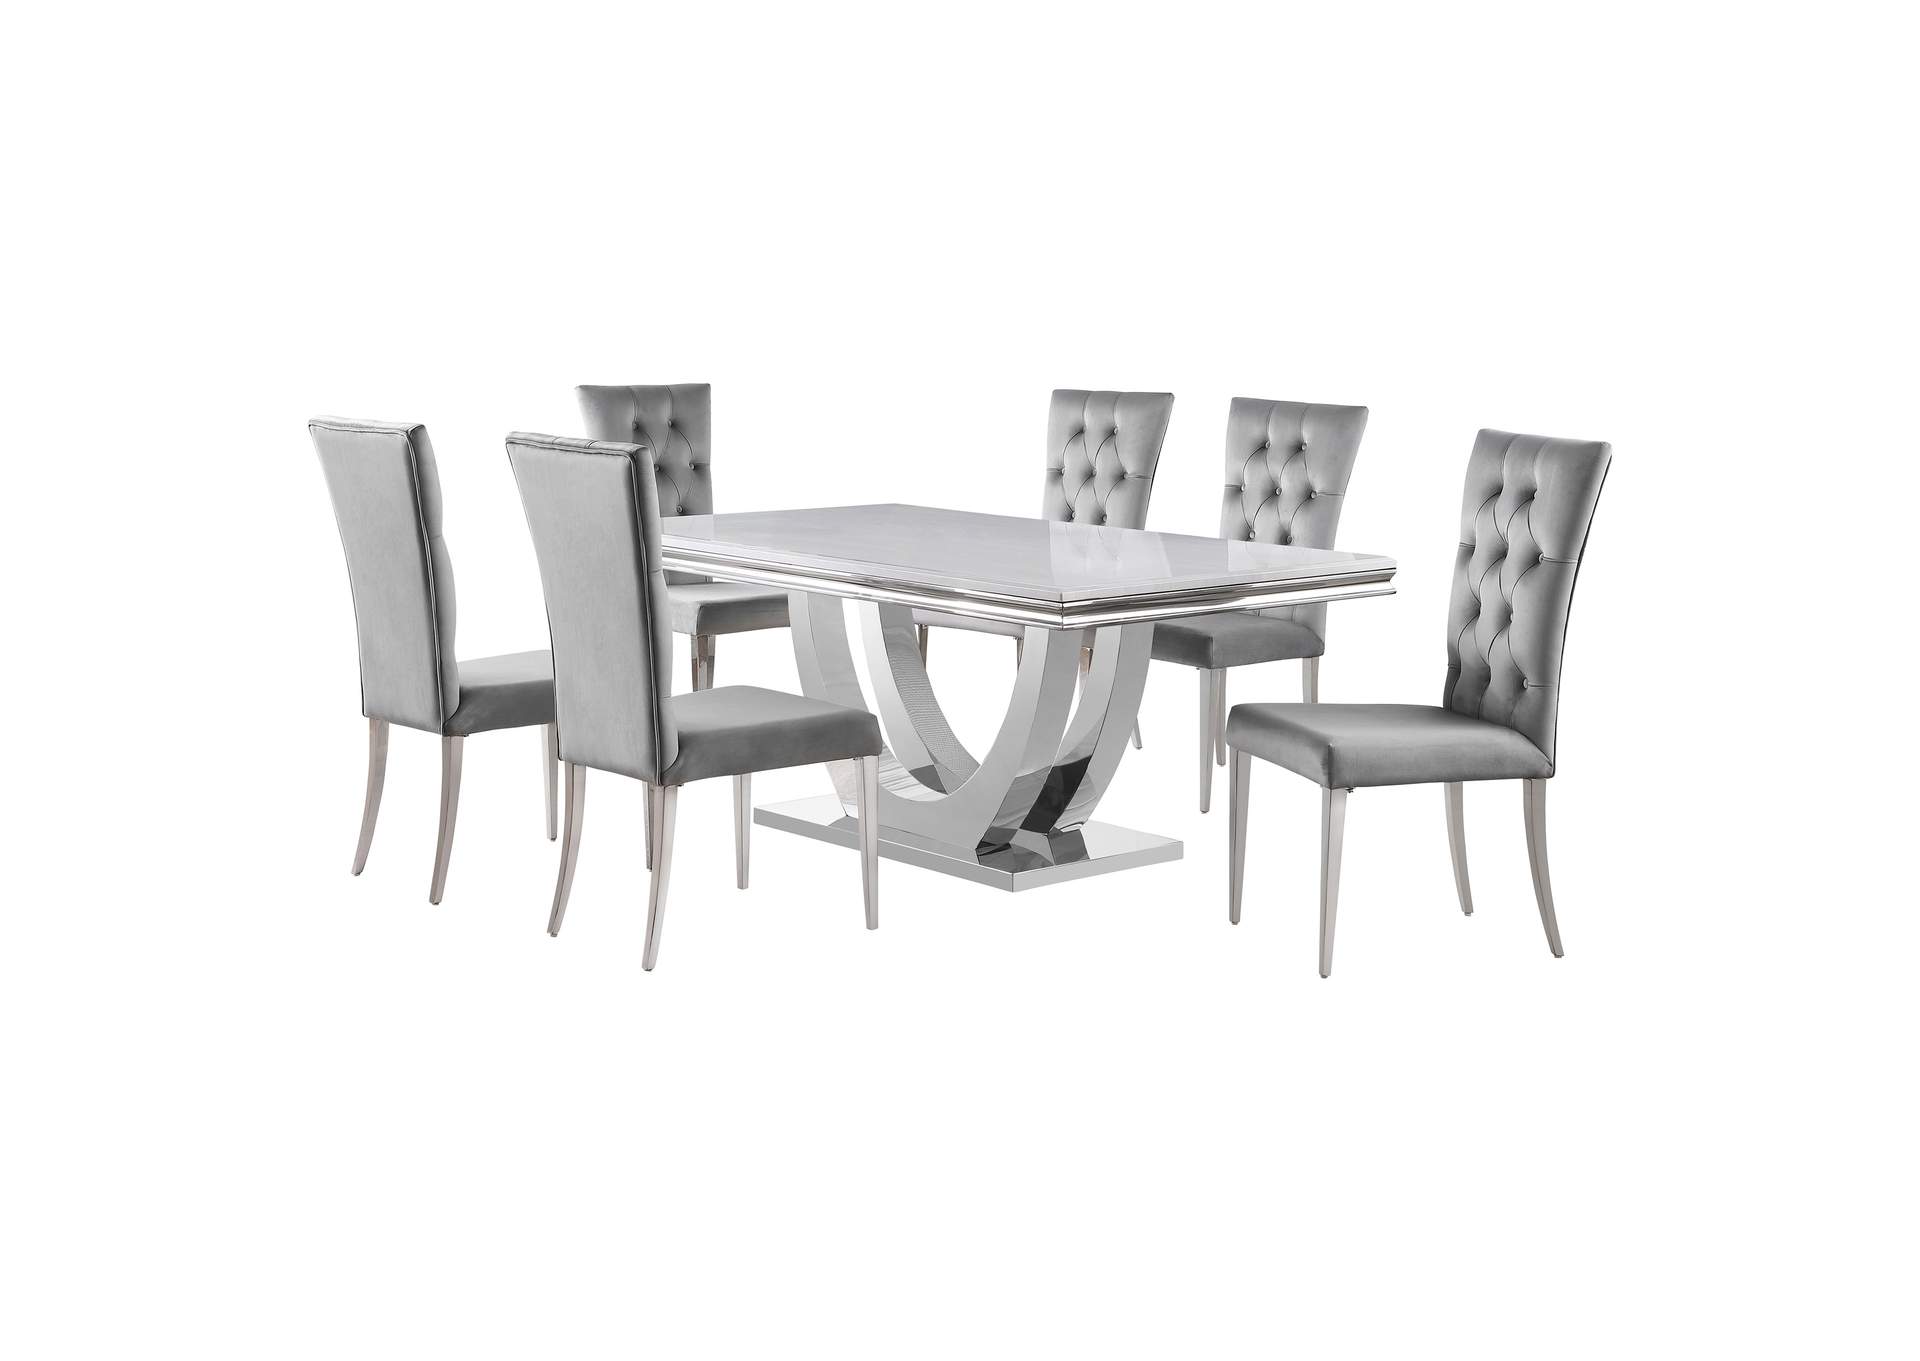 Kerwin 7-piece Dining Room Set Grey and Chrome,Coaster Furniture